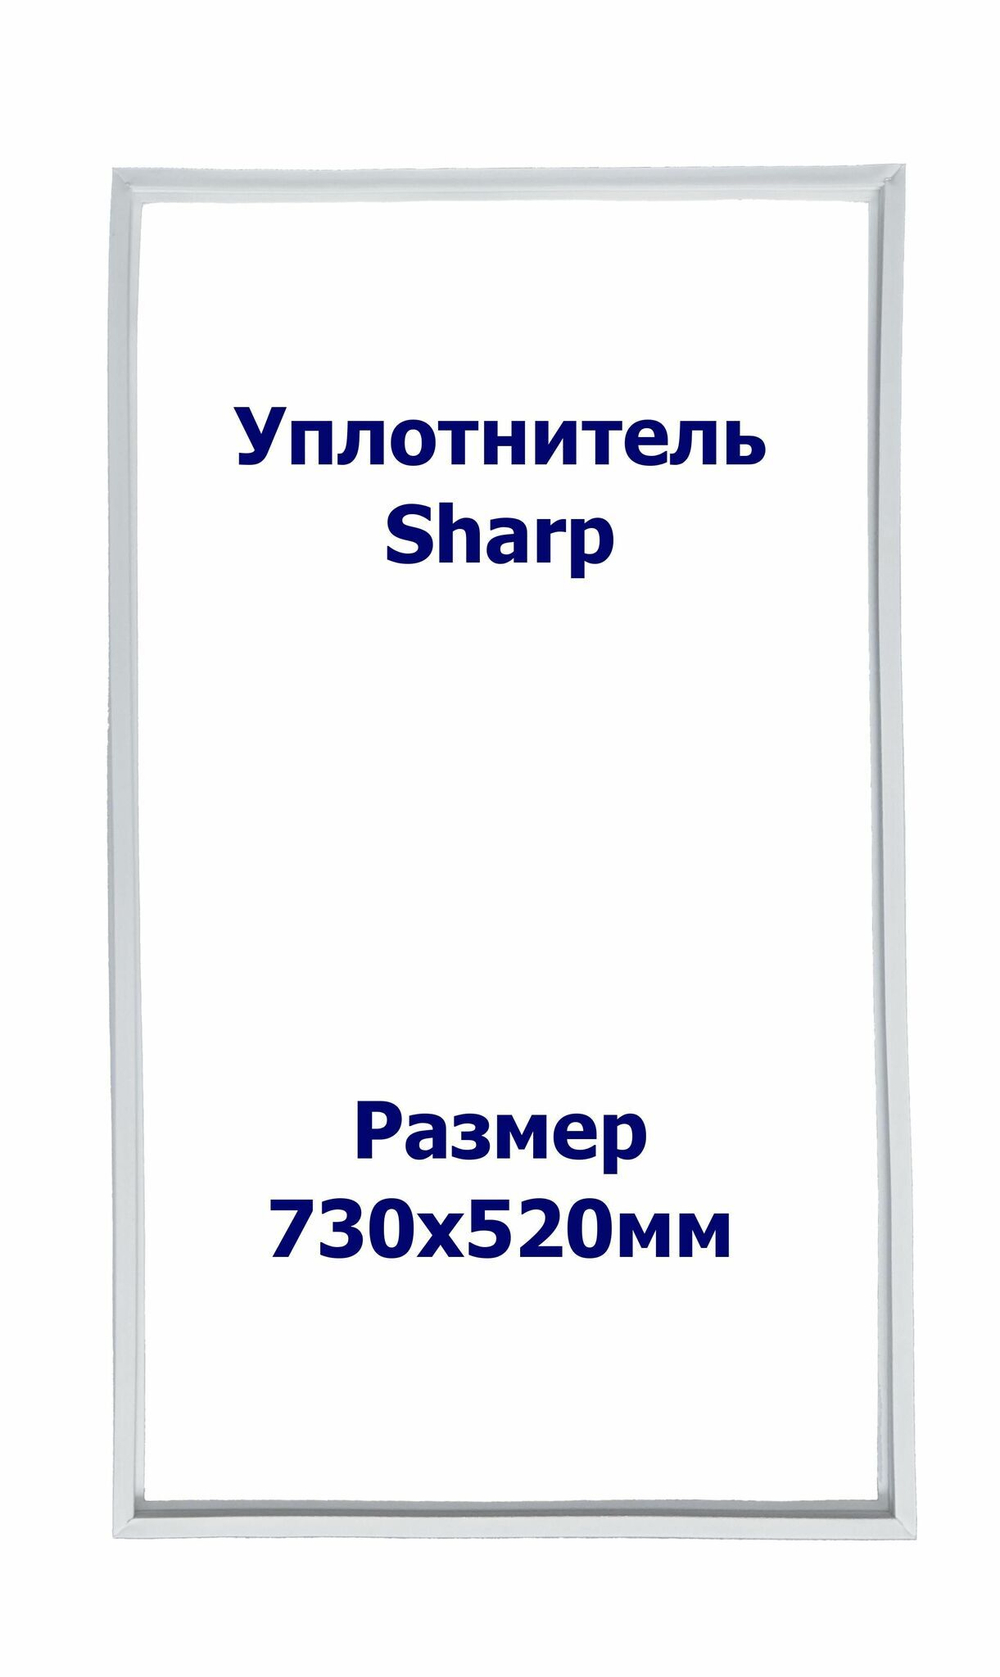 Уплотнитель Sharp SJ-59M-BE. м.к., Размер - 730х520 мм. SK